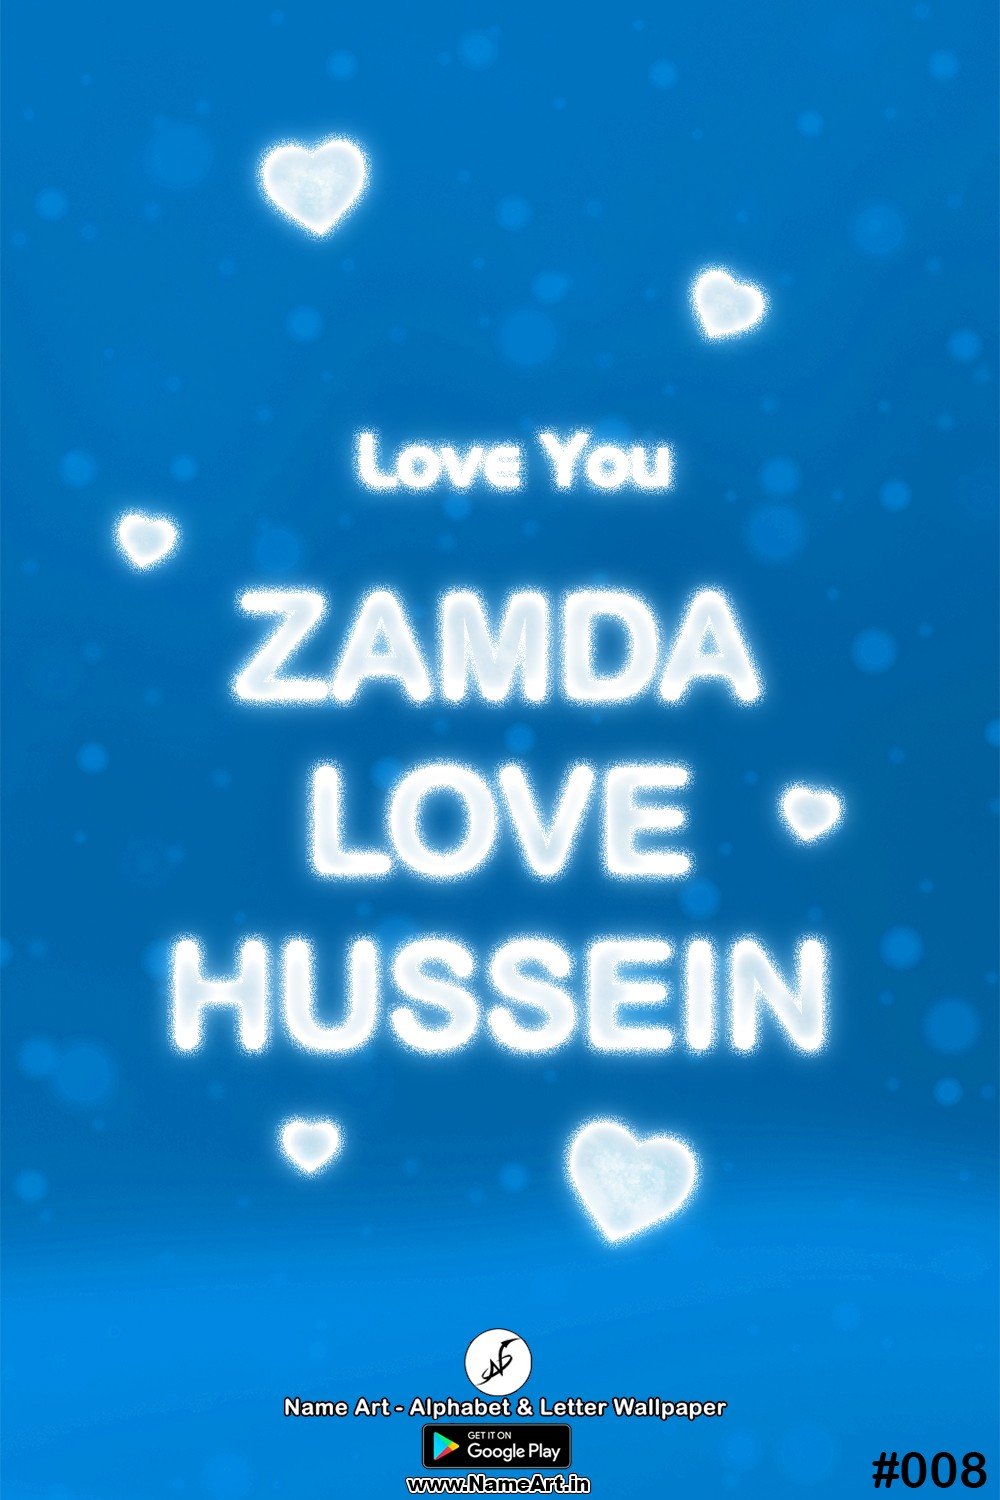 Zamda Love Hussein | Whatsapp Status Zamda Love Hussein | Happy Birthday Zamda Love Hussein !! | New Whatsapp Status Zamda Love Hussein Images |